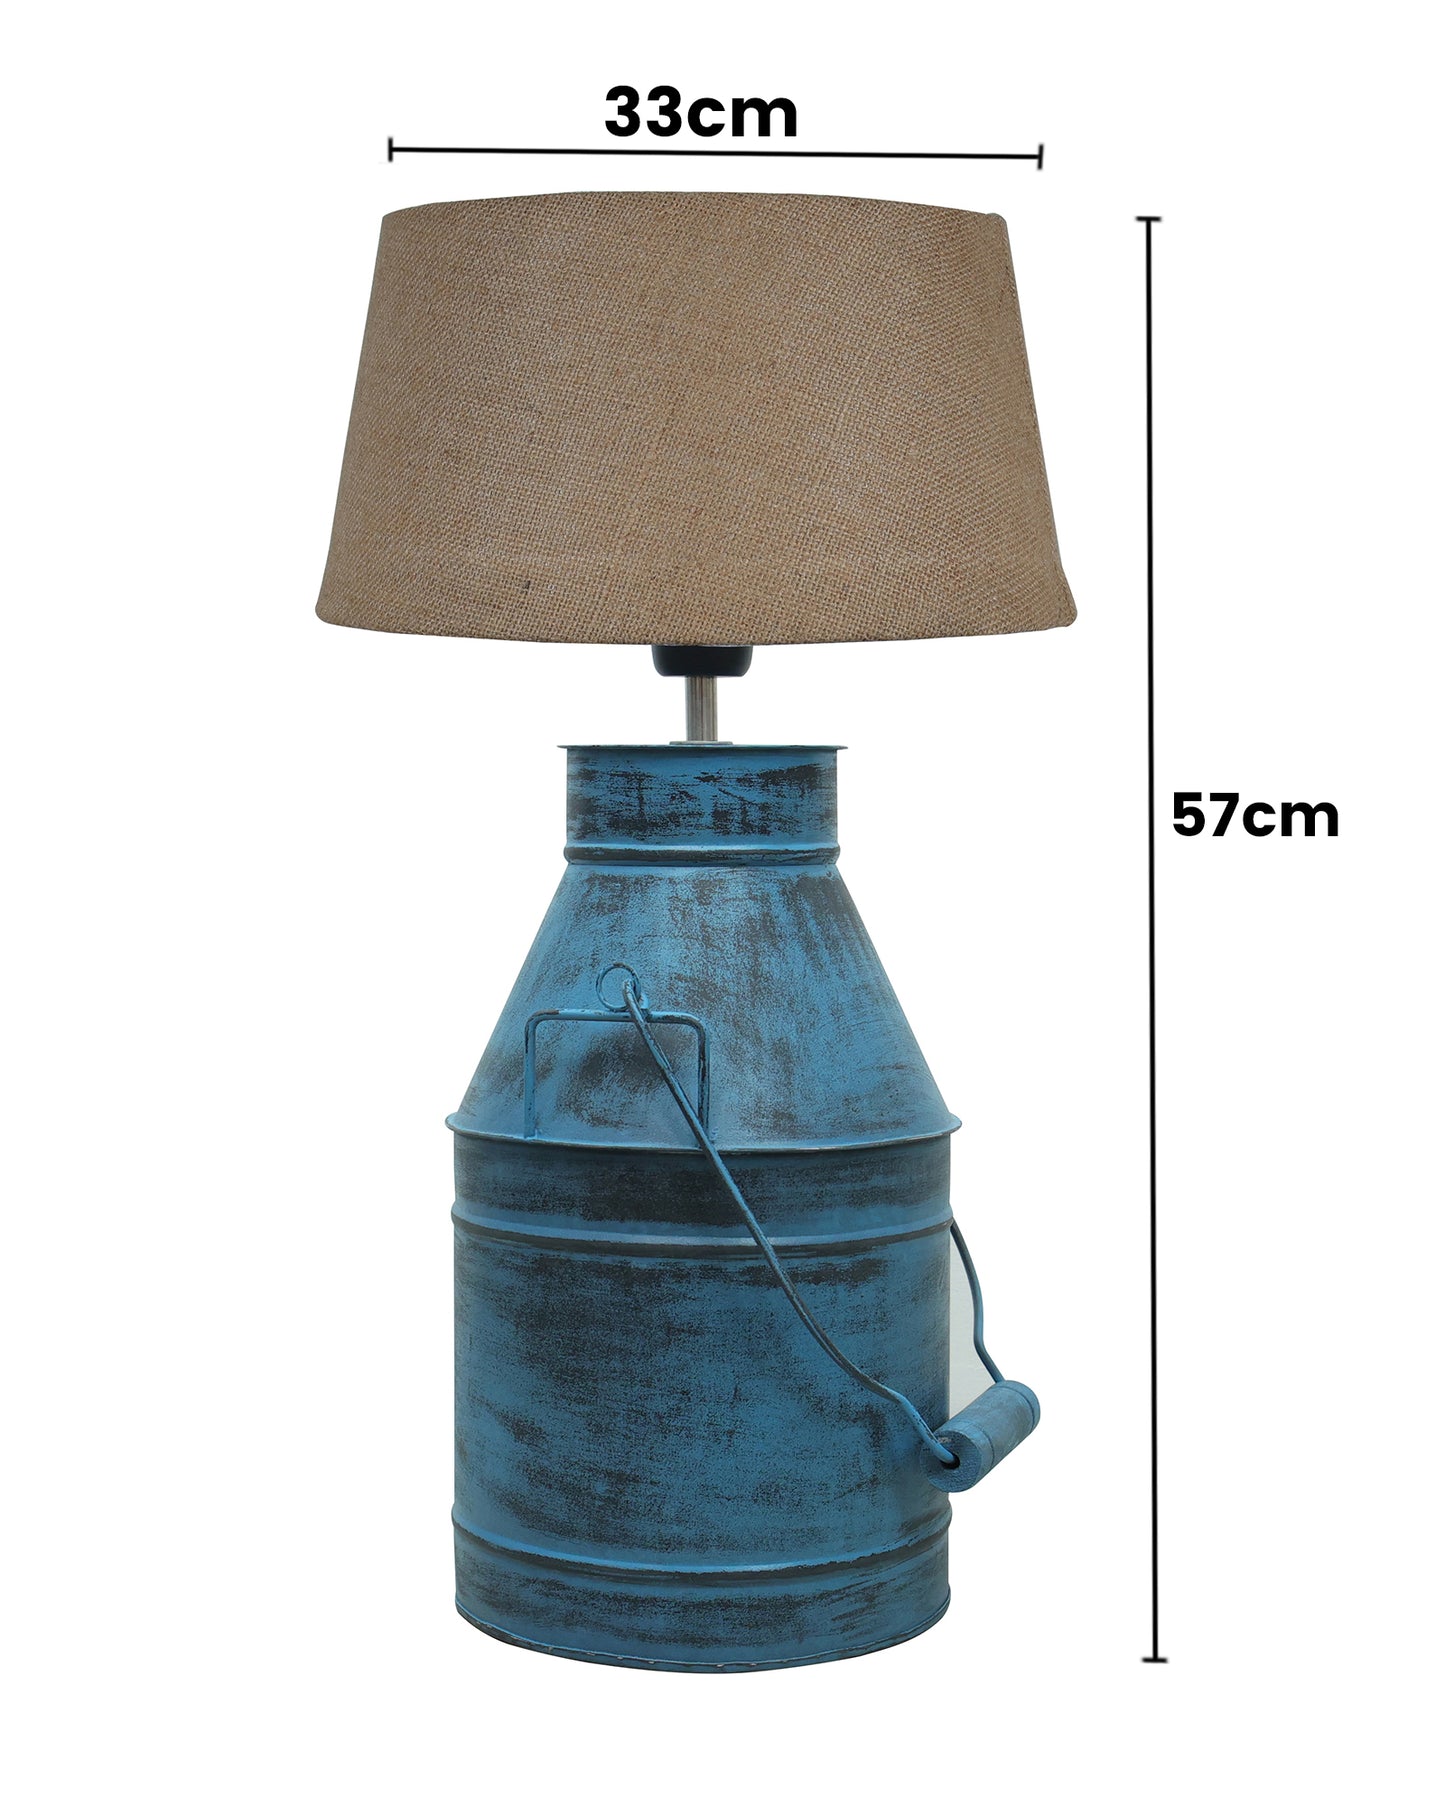 Rustic Milk Churn Can Table Lamp with Drum shade, Rustic Algae